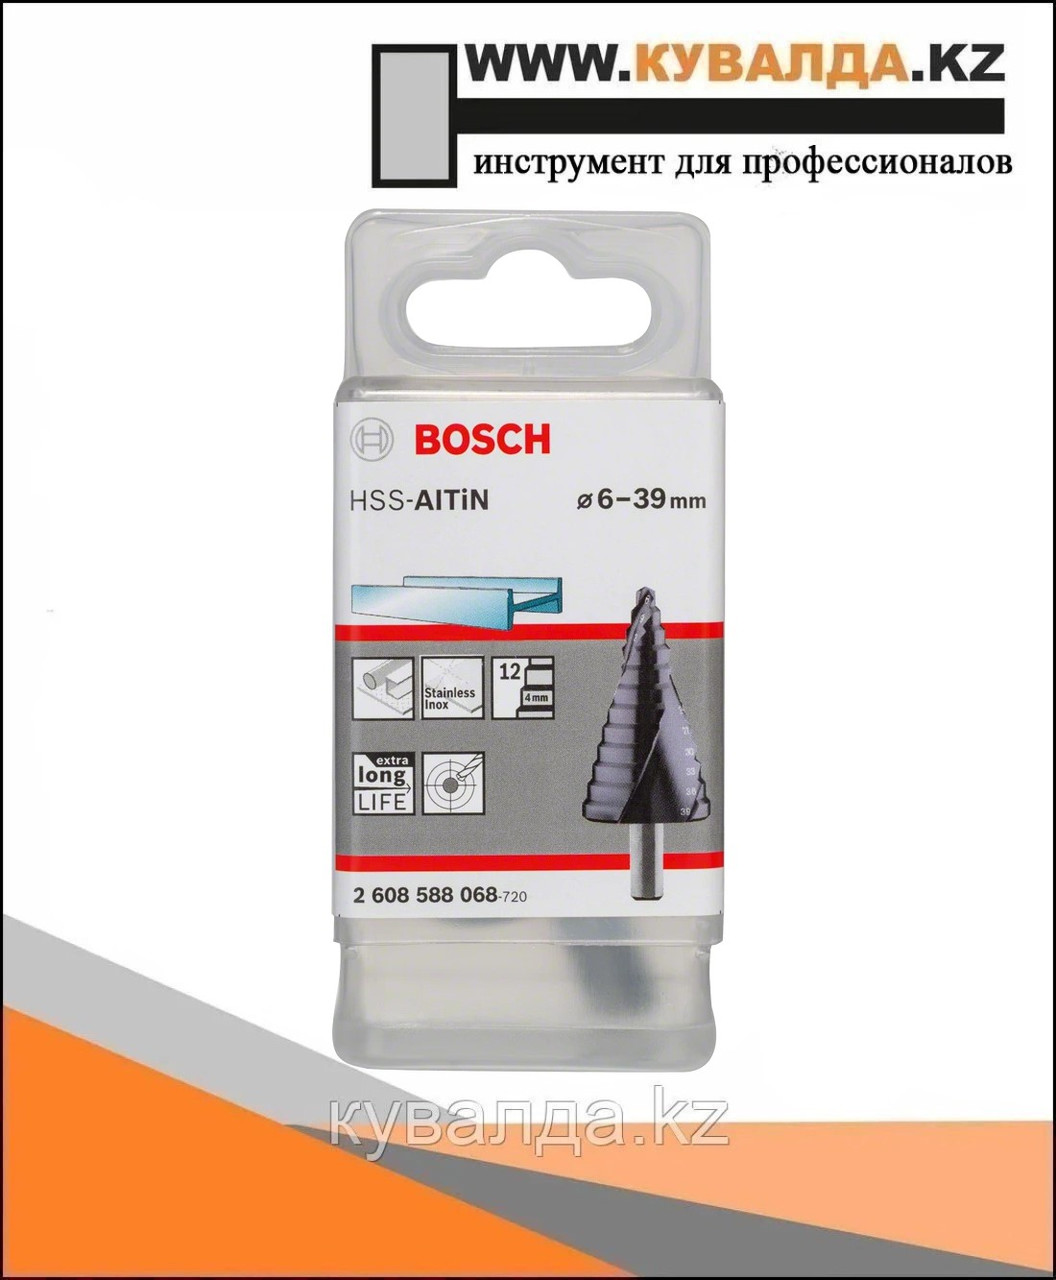 Bosch Ступ сверло HSS-AlTiN 12 ступ 6-39 мм